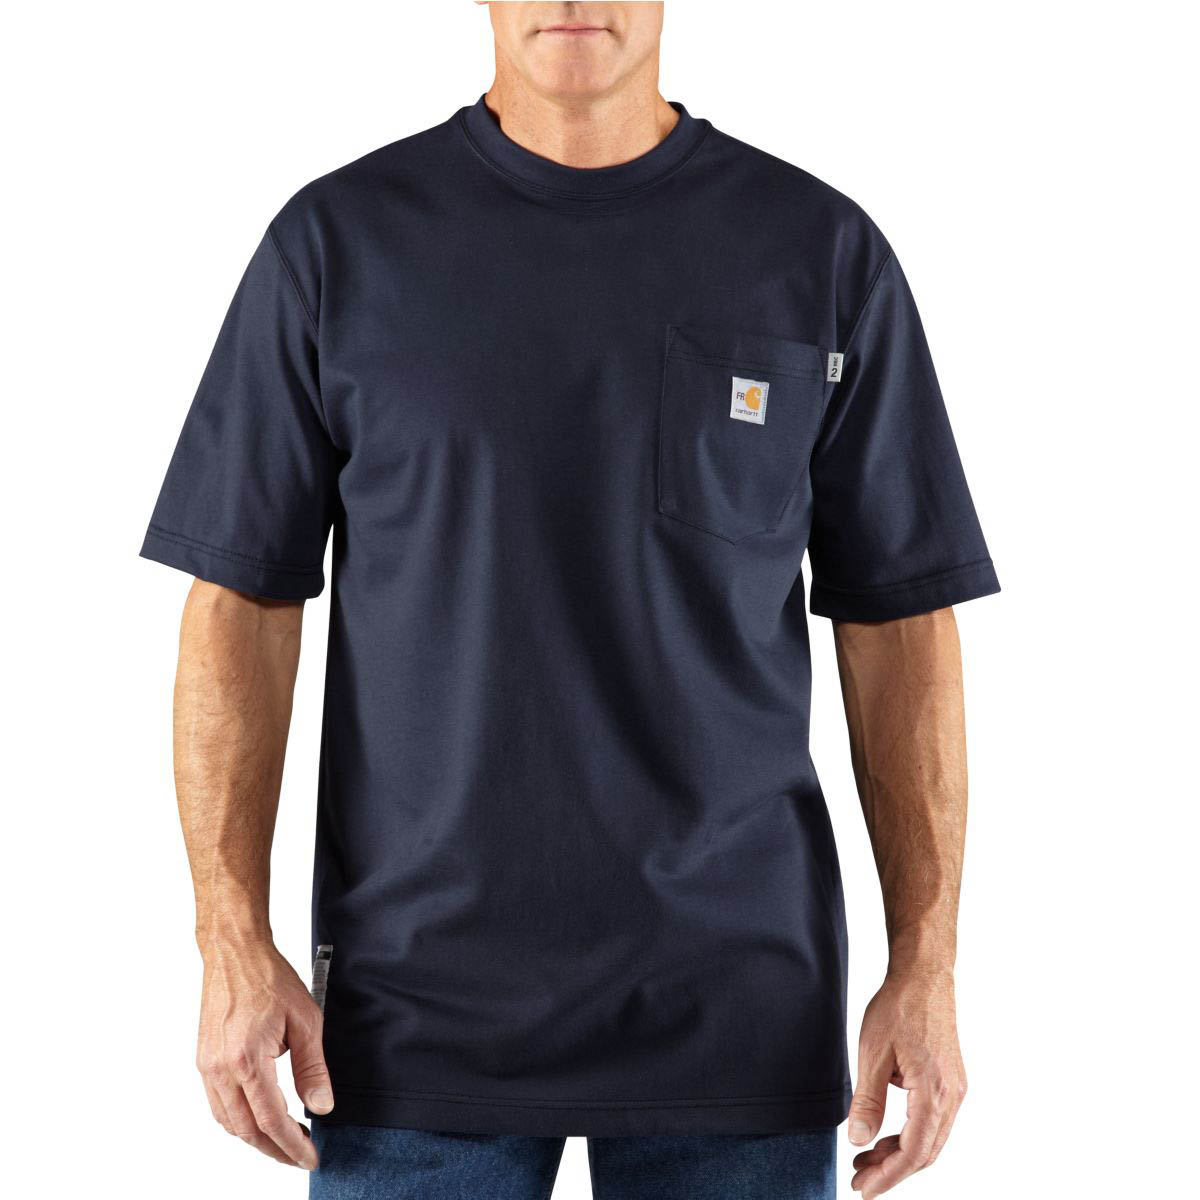 Carhartt Men's Flame Resistant Force Cotton Short Sleeve T Shirt